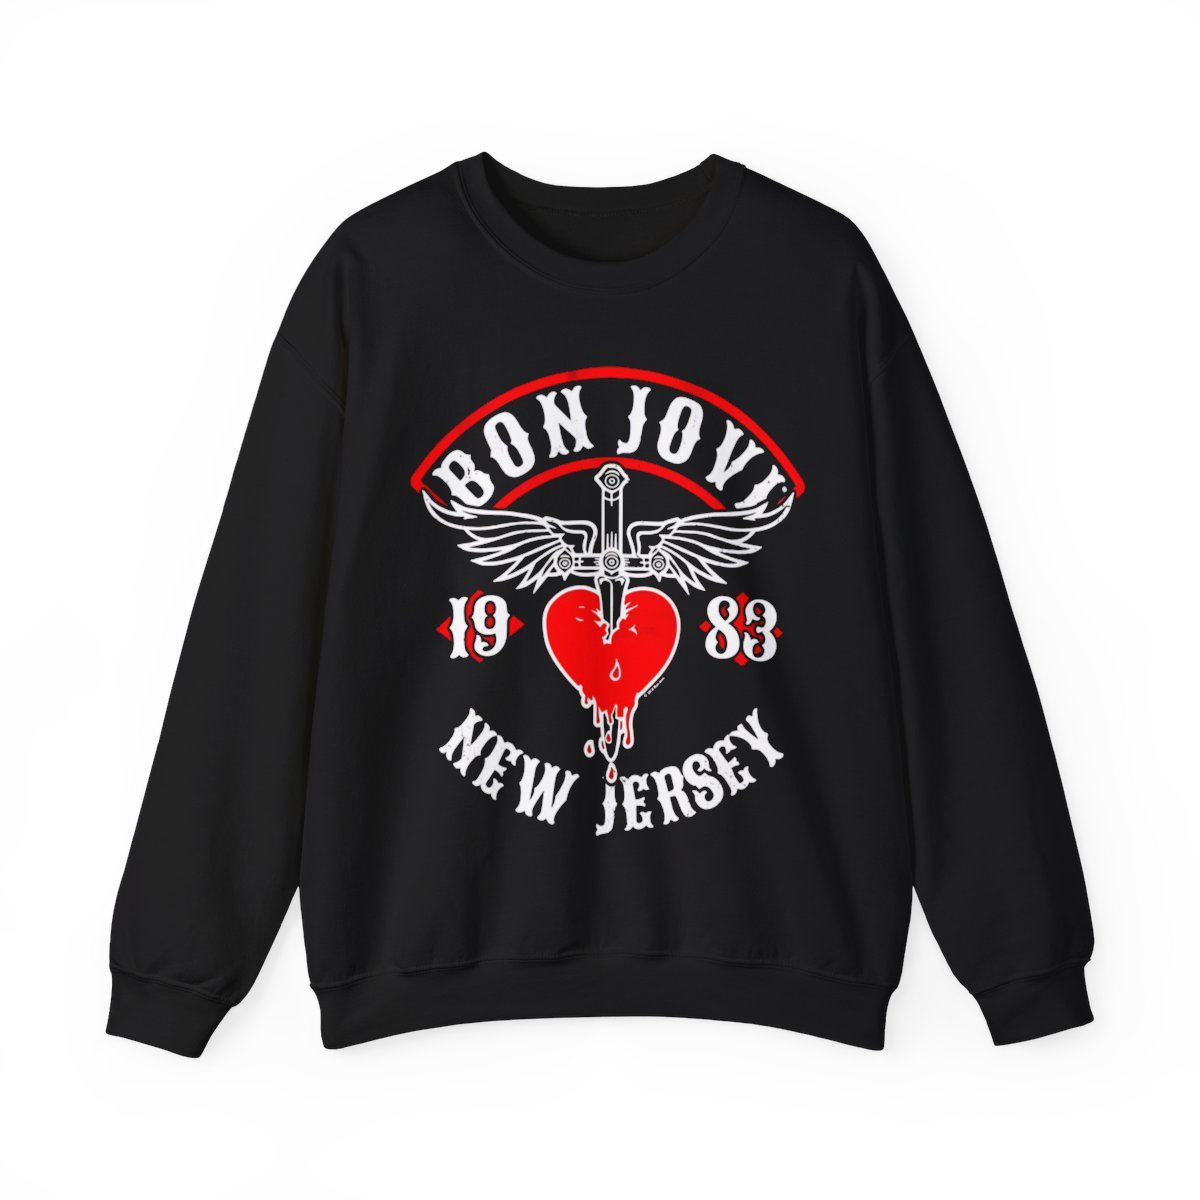 Bon Jovi New Jersey 1983 Shirt Rock Band Album Music Concert Tour Merch Unisex Heavy Blend Crewneck Sweatshirt